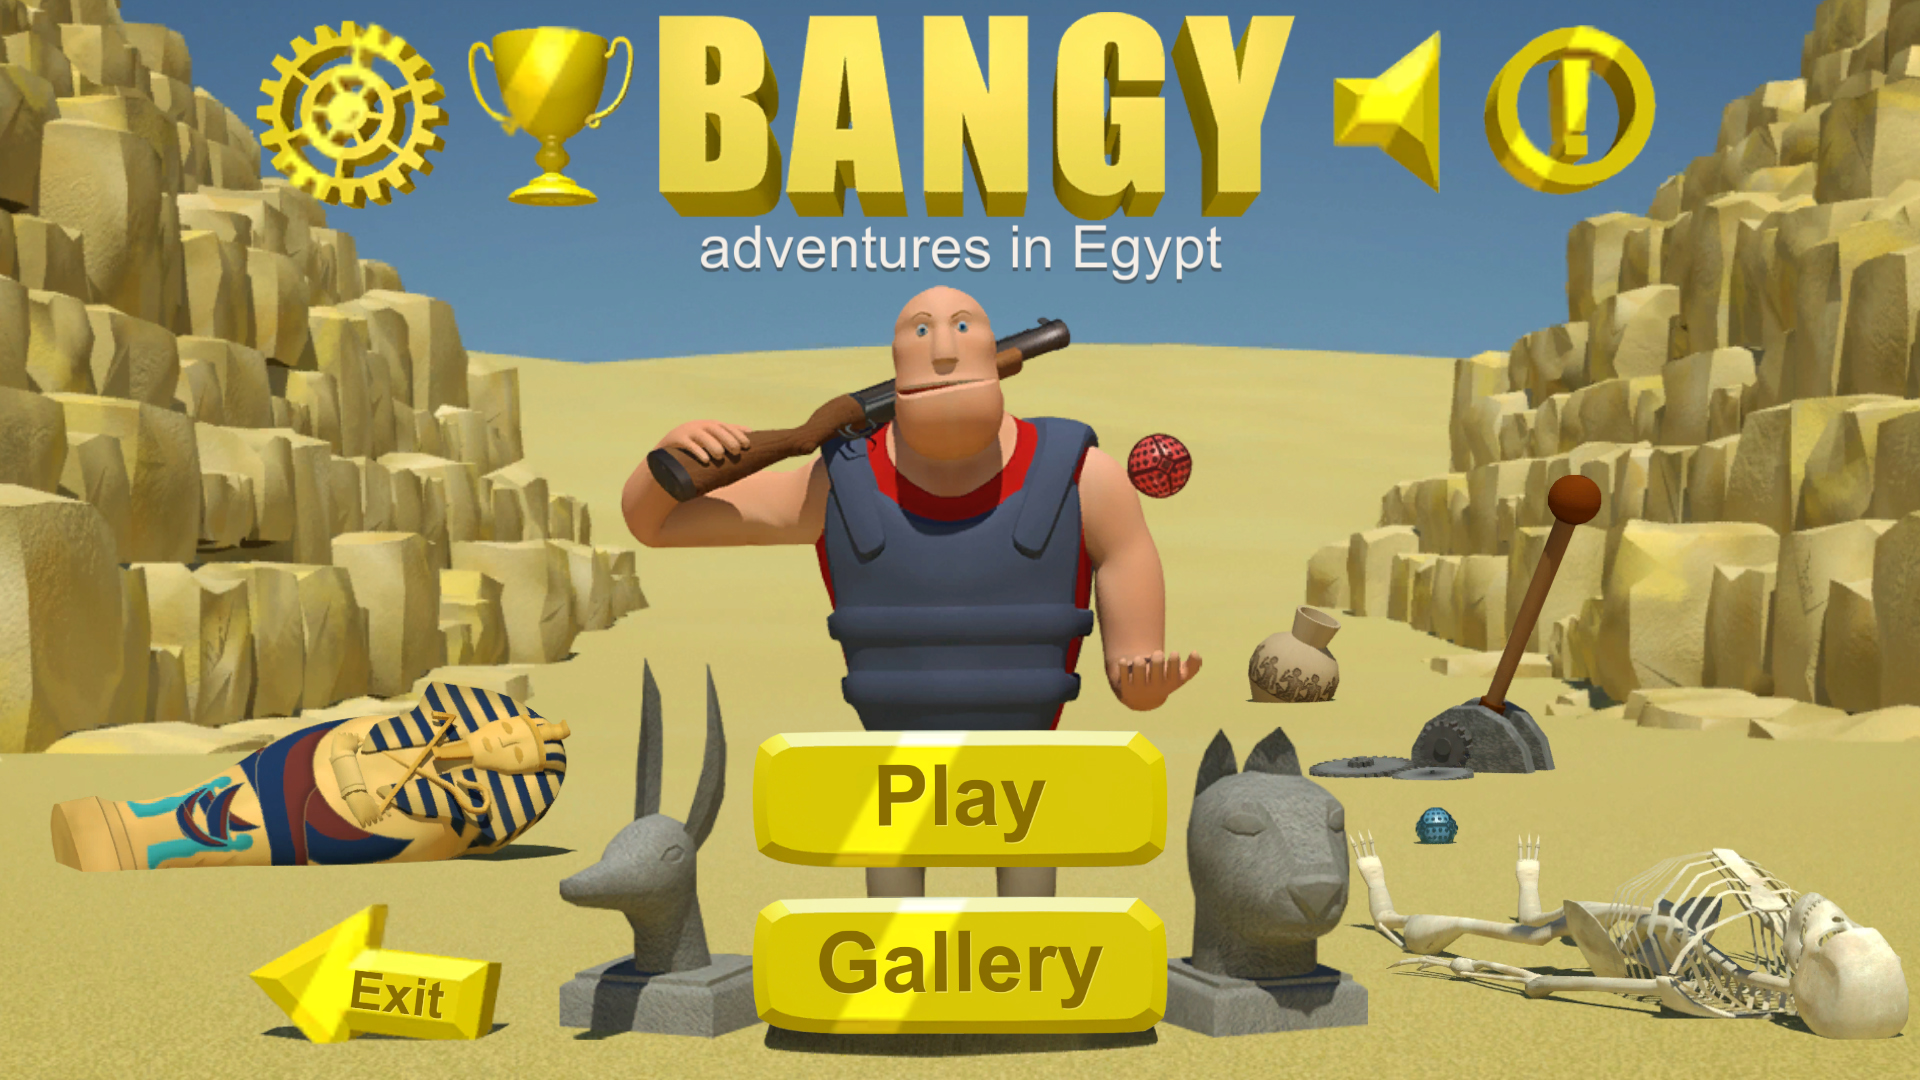 Bangy: Adventures in Egypt